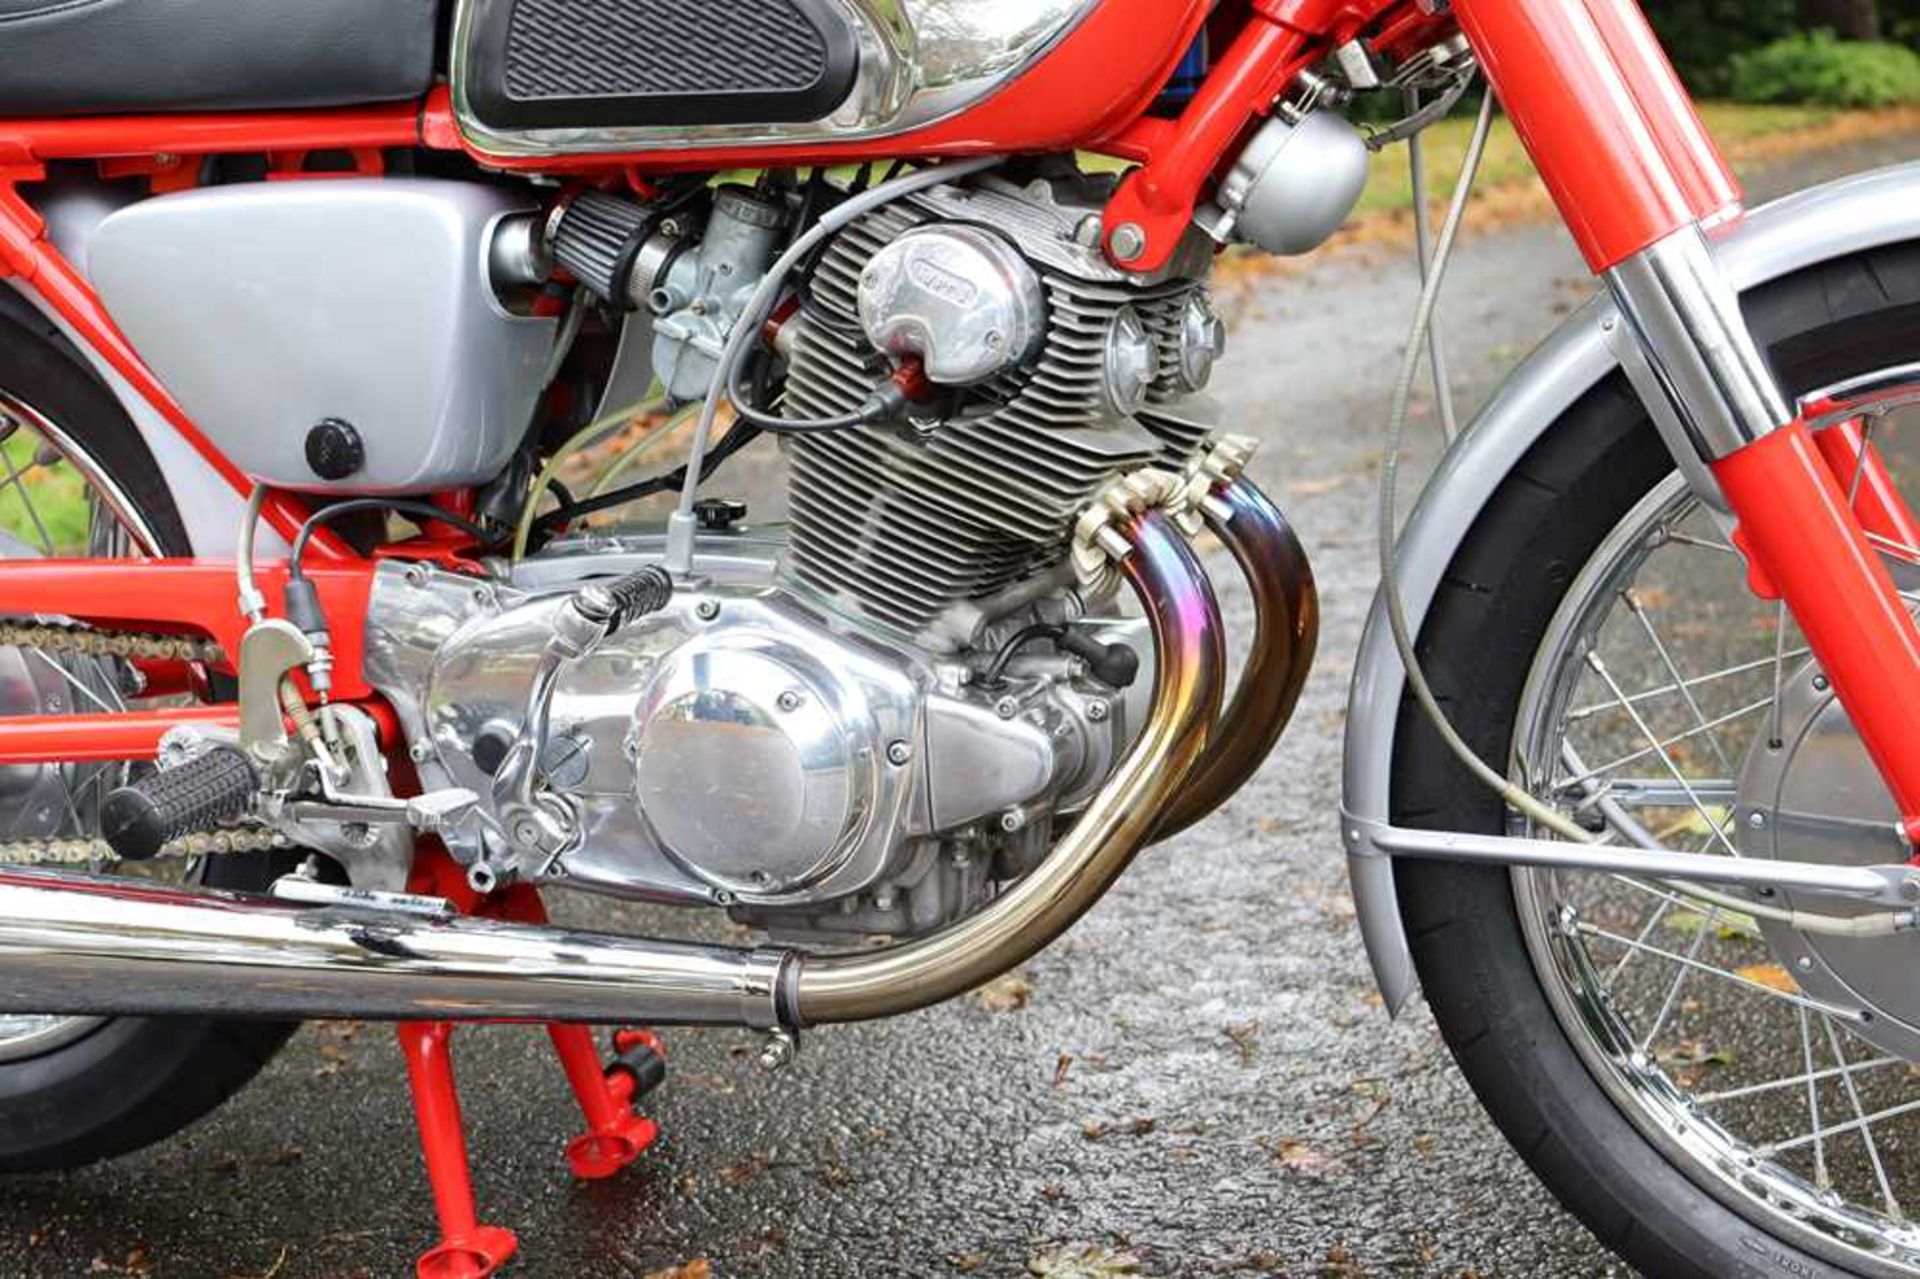 1966 Honda CB77 Restored to a high standard - Image 12 of 65